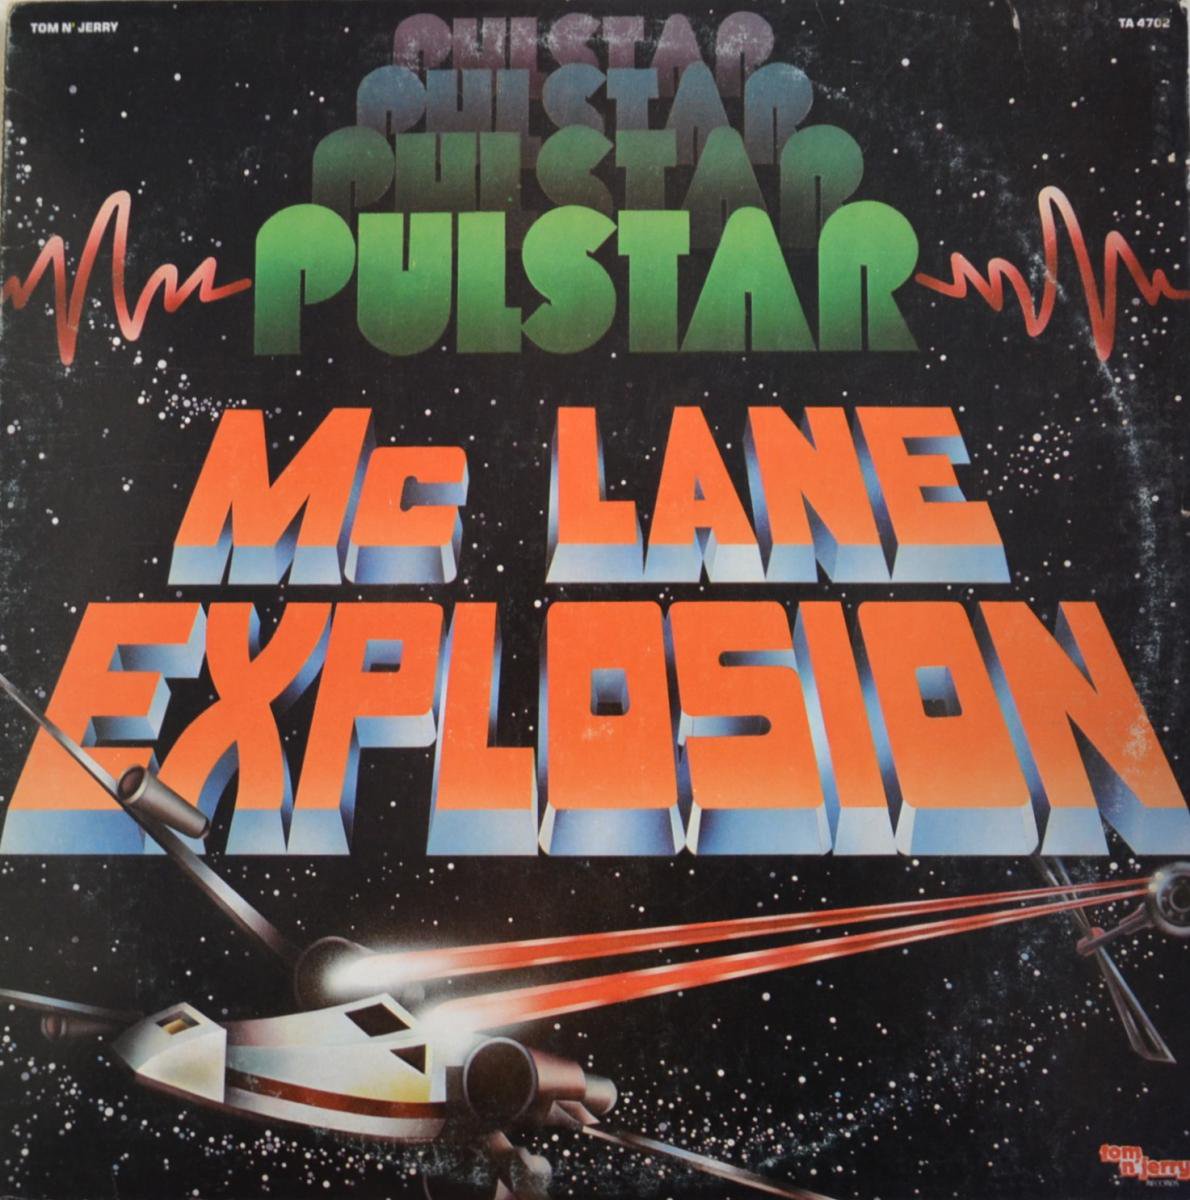 MC LANE EXPLOSION / PULSTAR (LP)